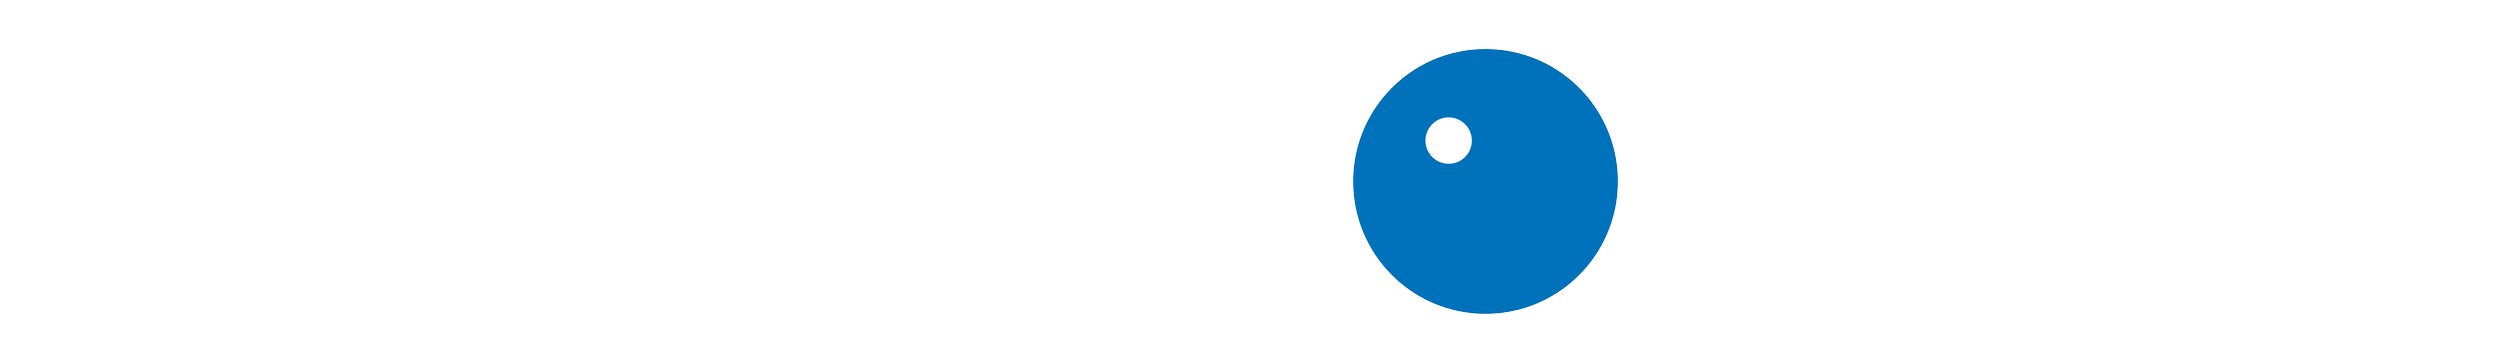 Harmonix Logo.png